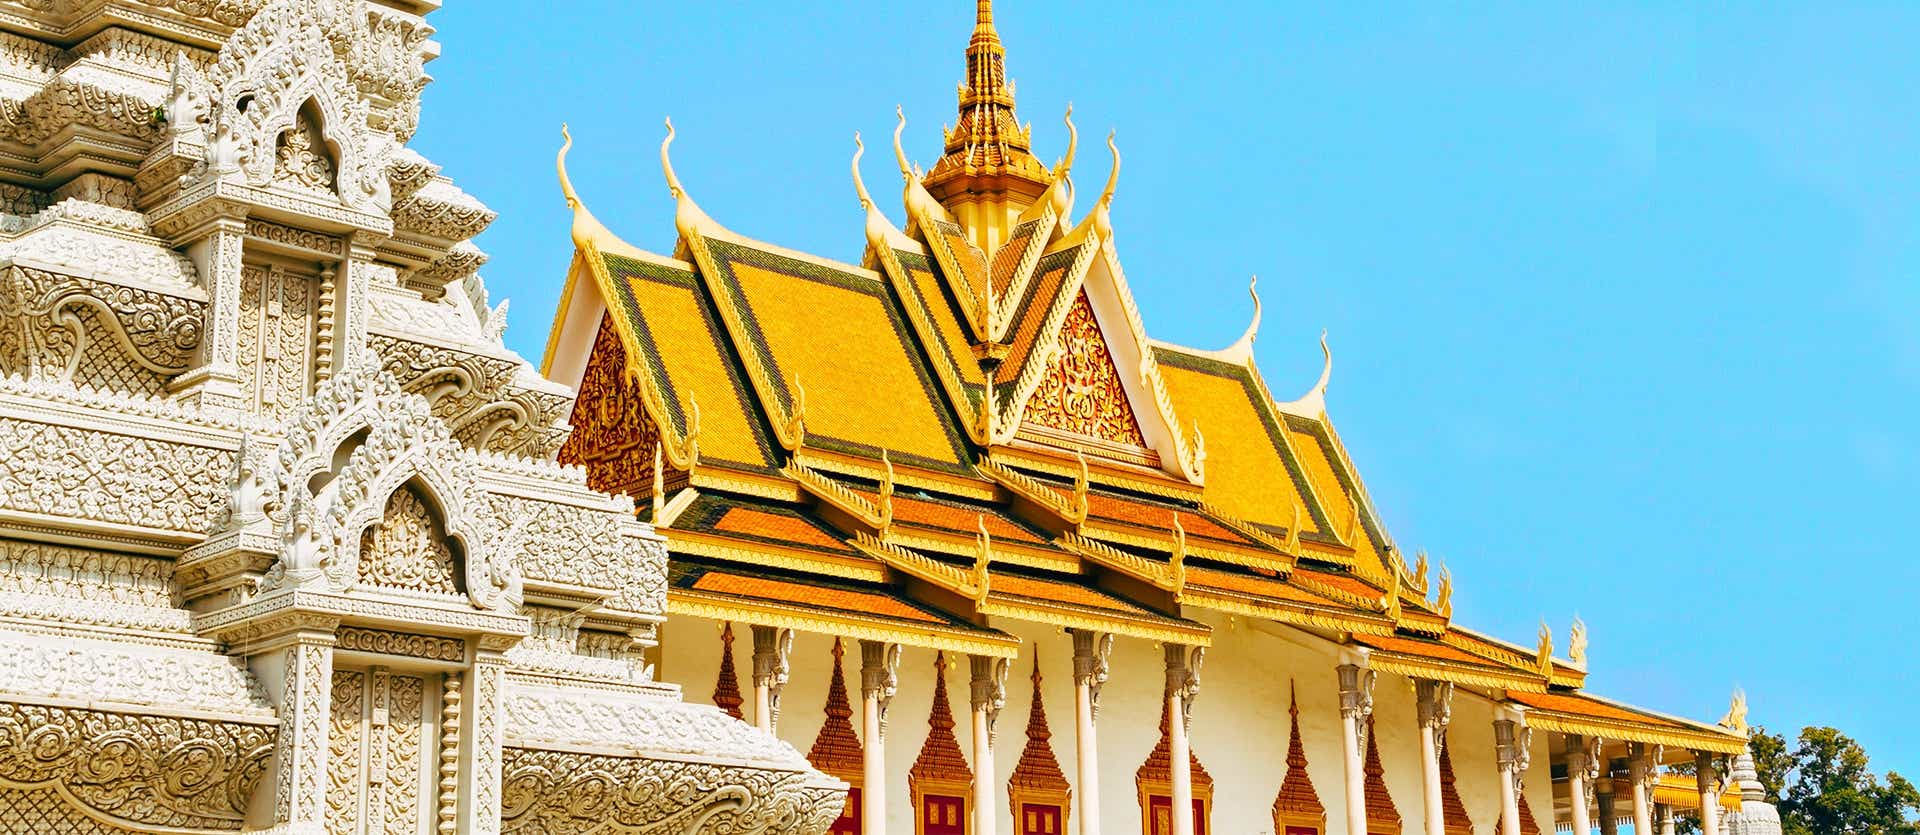 Royal Palace <span class="iconos separador"></span> Phnom Penh <span class="iconos separador"></span> Cambodia 